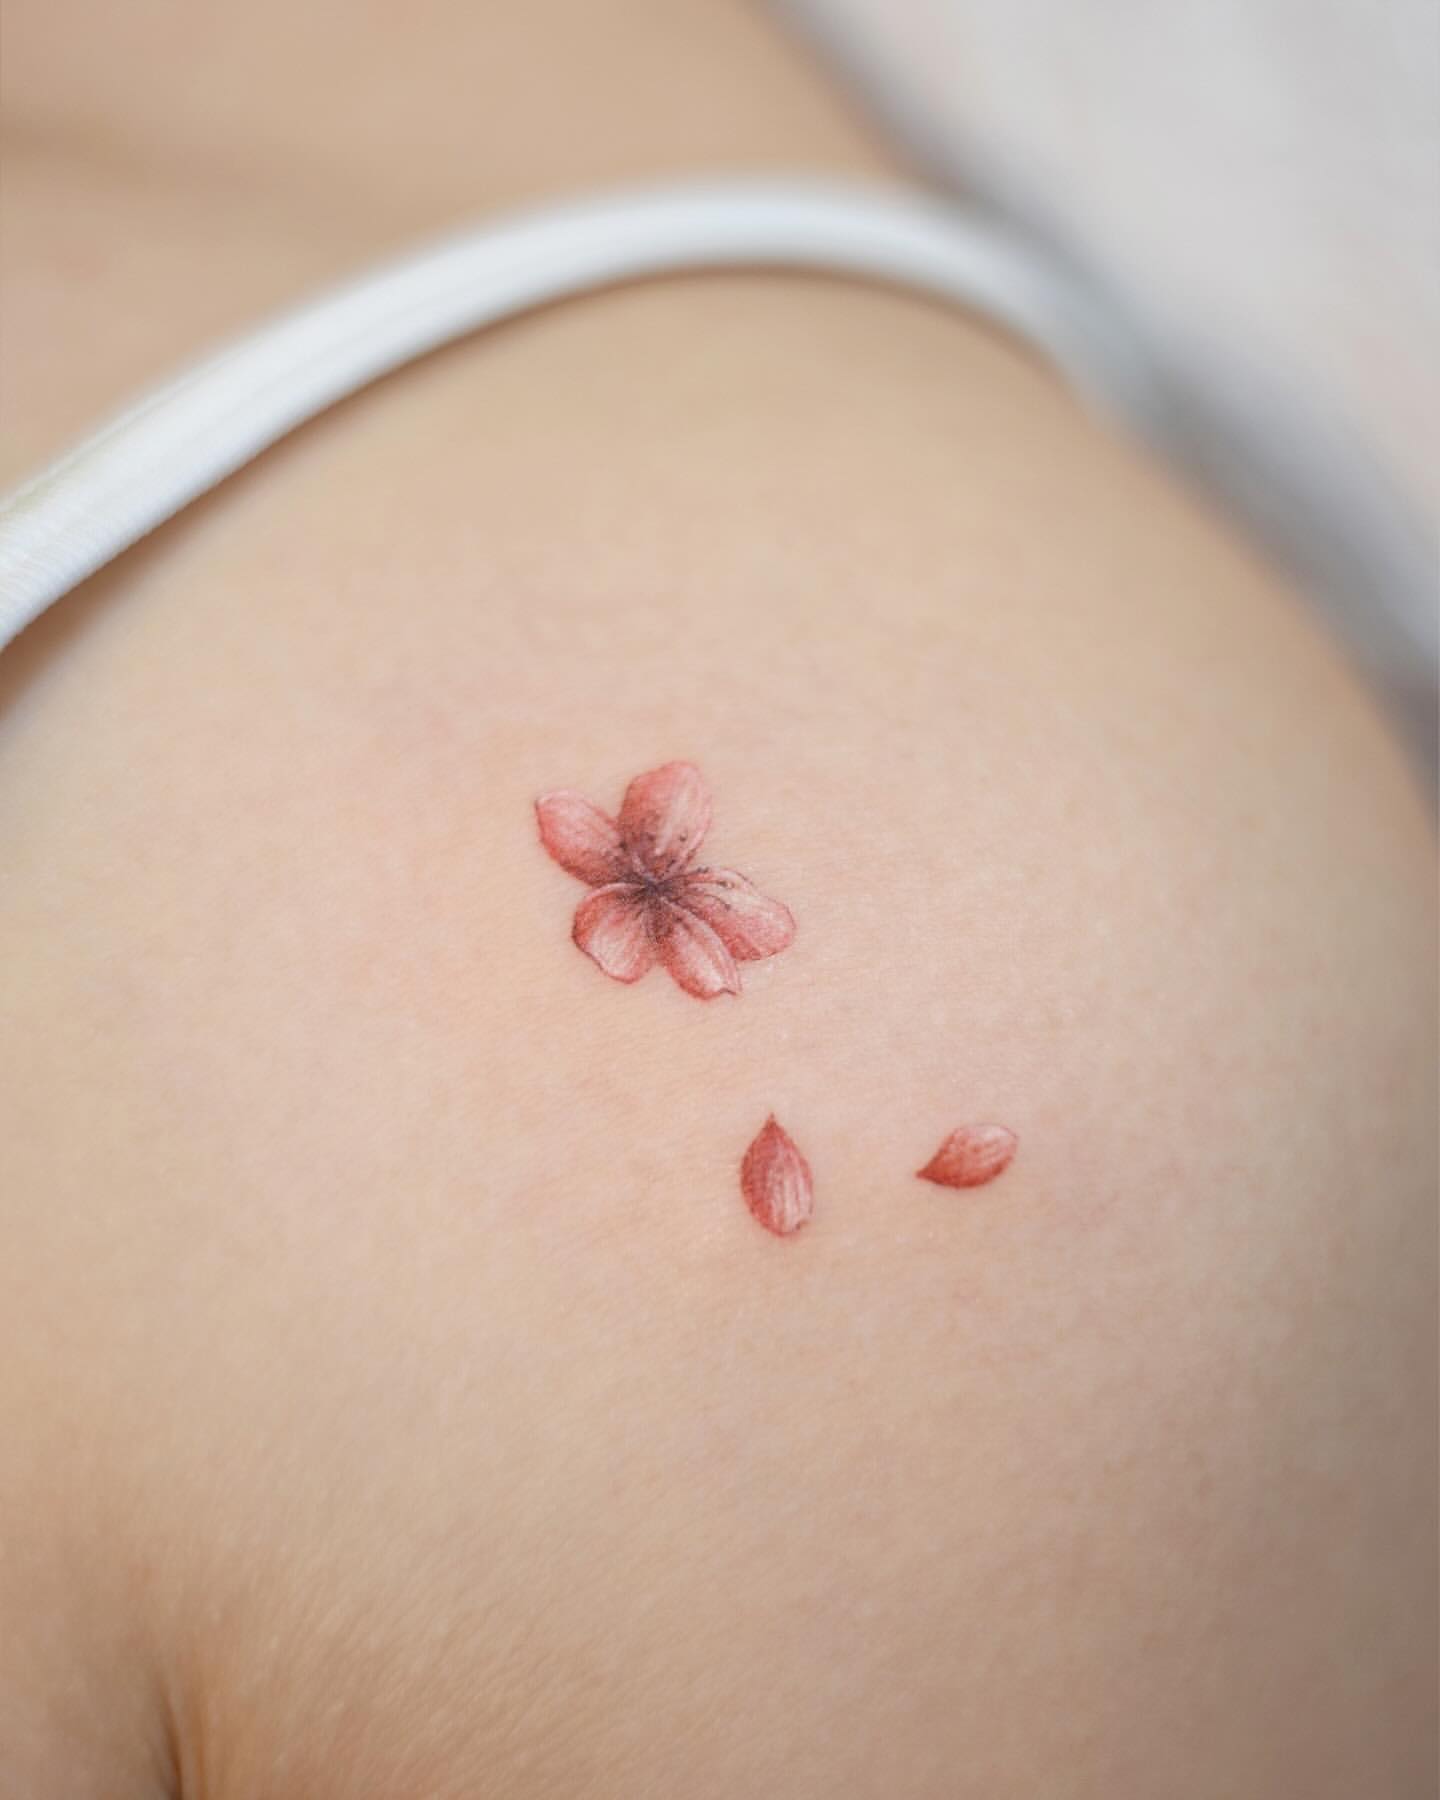 tatuaje de una pequeña flor